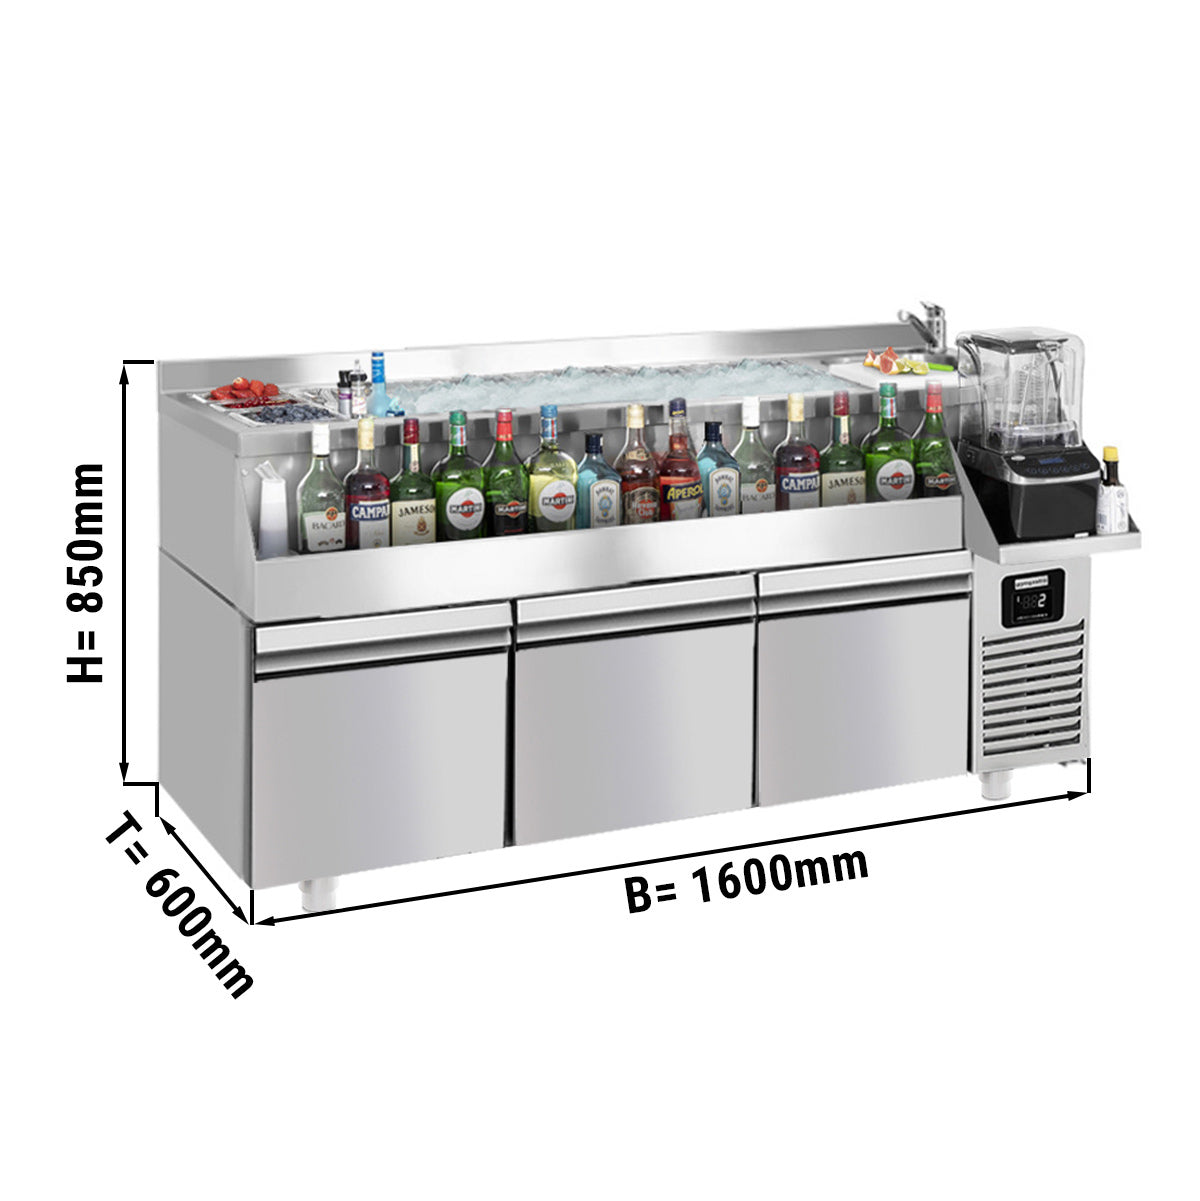 Хладилна маса за бар / напитки - 1,6 х 0,6 м - 235 литра - с 3 чекмеджета 1/1 и рафтове